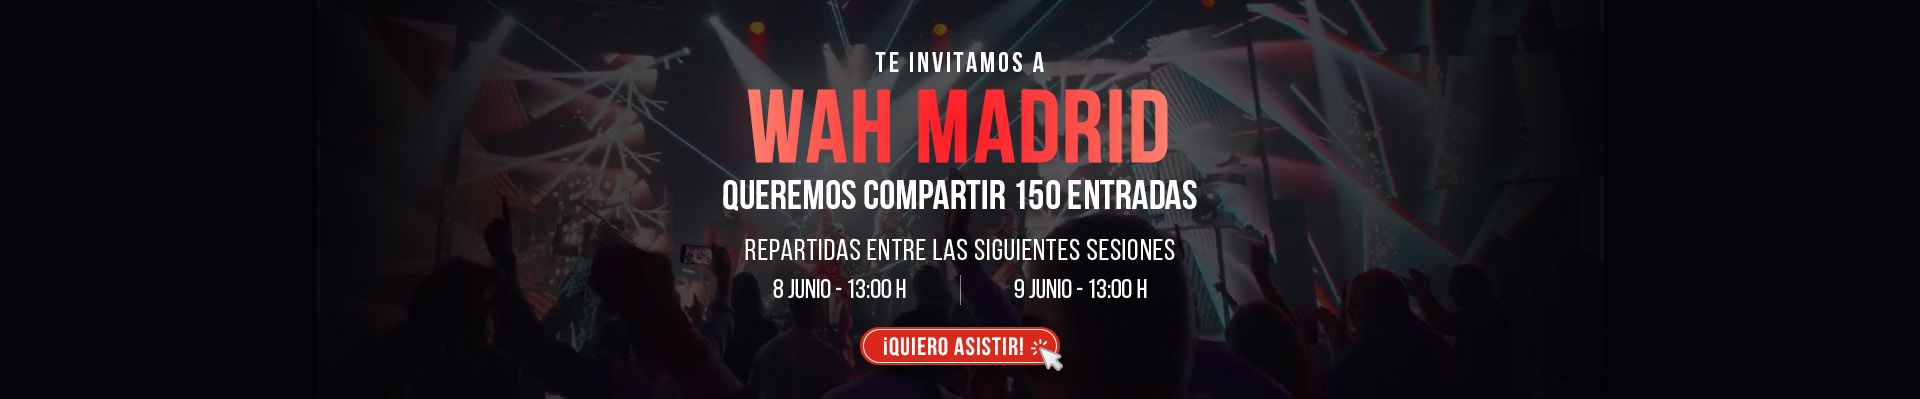 WAH | Show Musical y Gastronómico en IFEMA MADRID